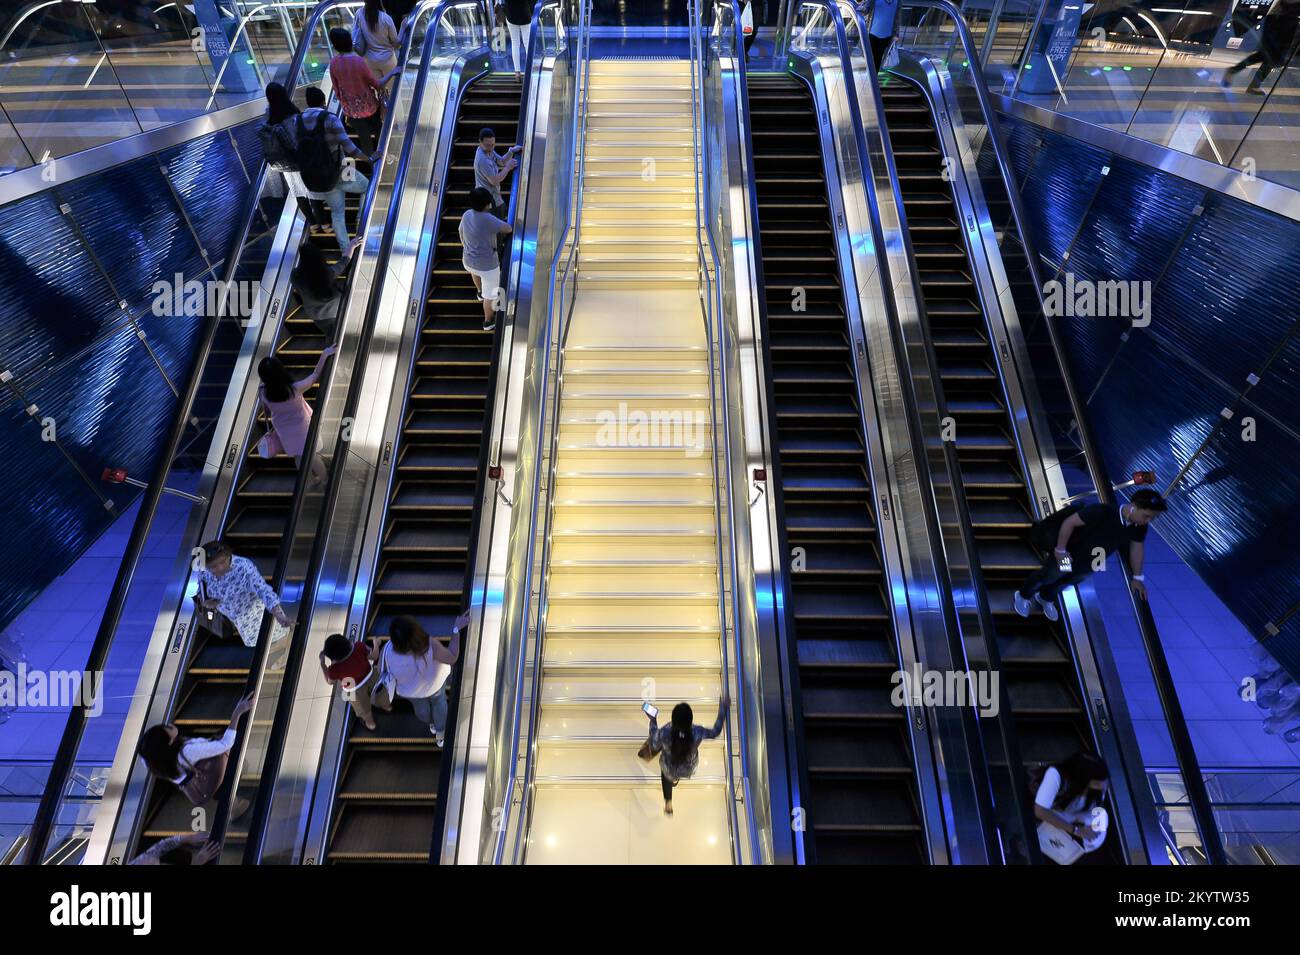 Dubai, United Arab Emirates - people ride escalators and climb stairs inside Dubai Metro Station. Futuristic interior design of BurJuman stop. Stock Photo